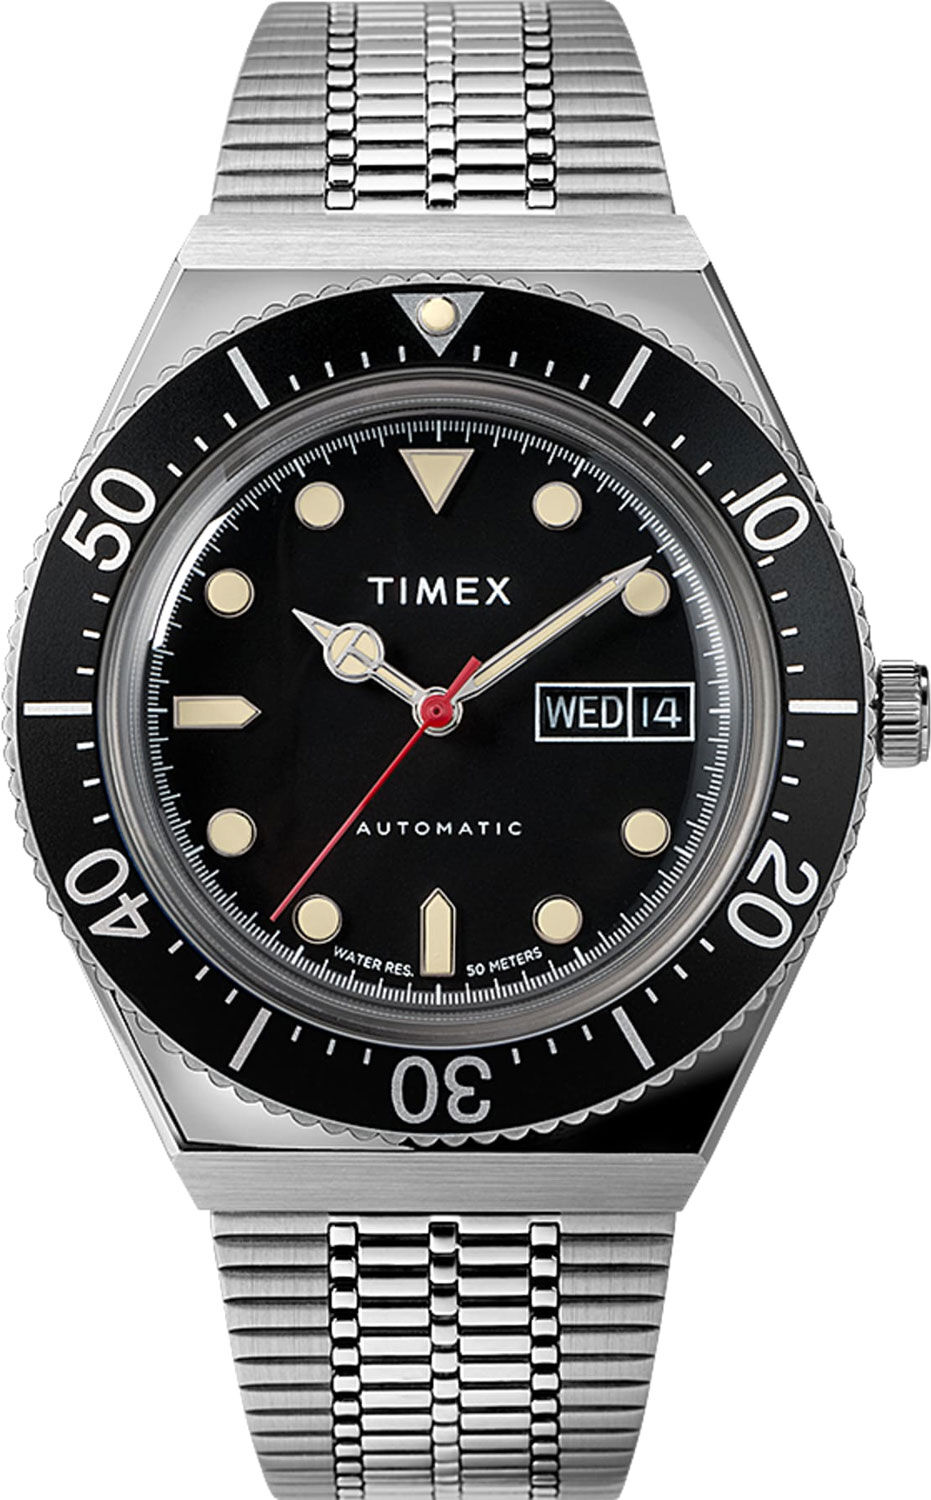 Мужские часы Timex M79 AUTOMATIC TW2U78300